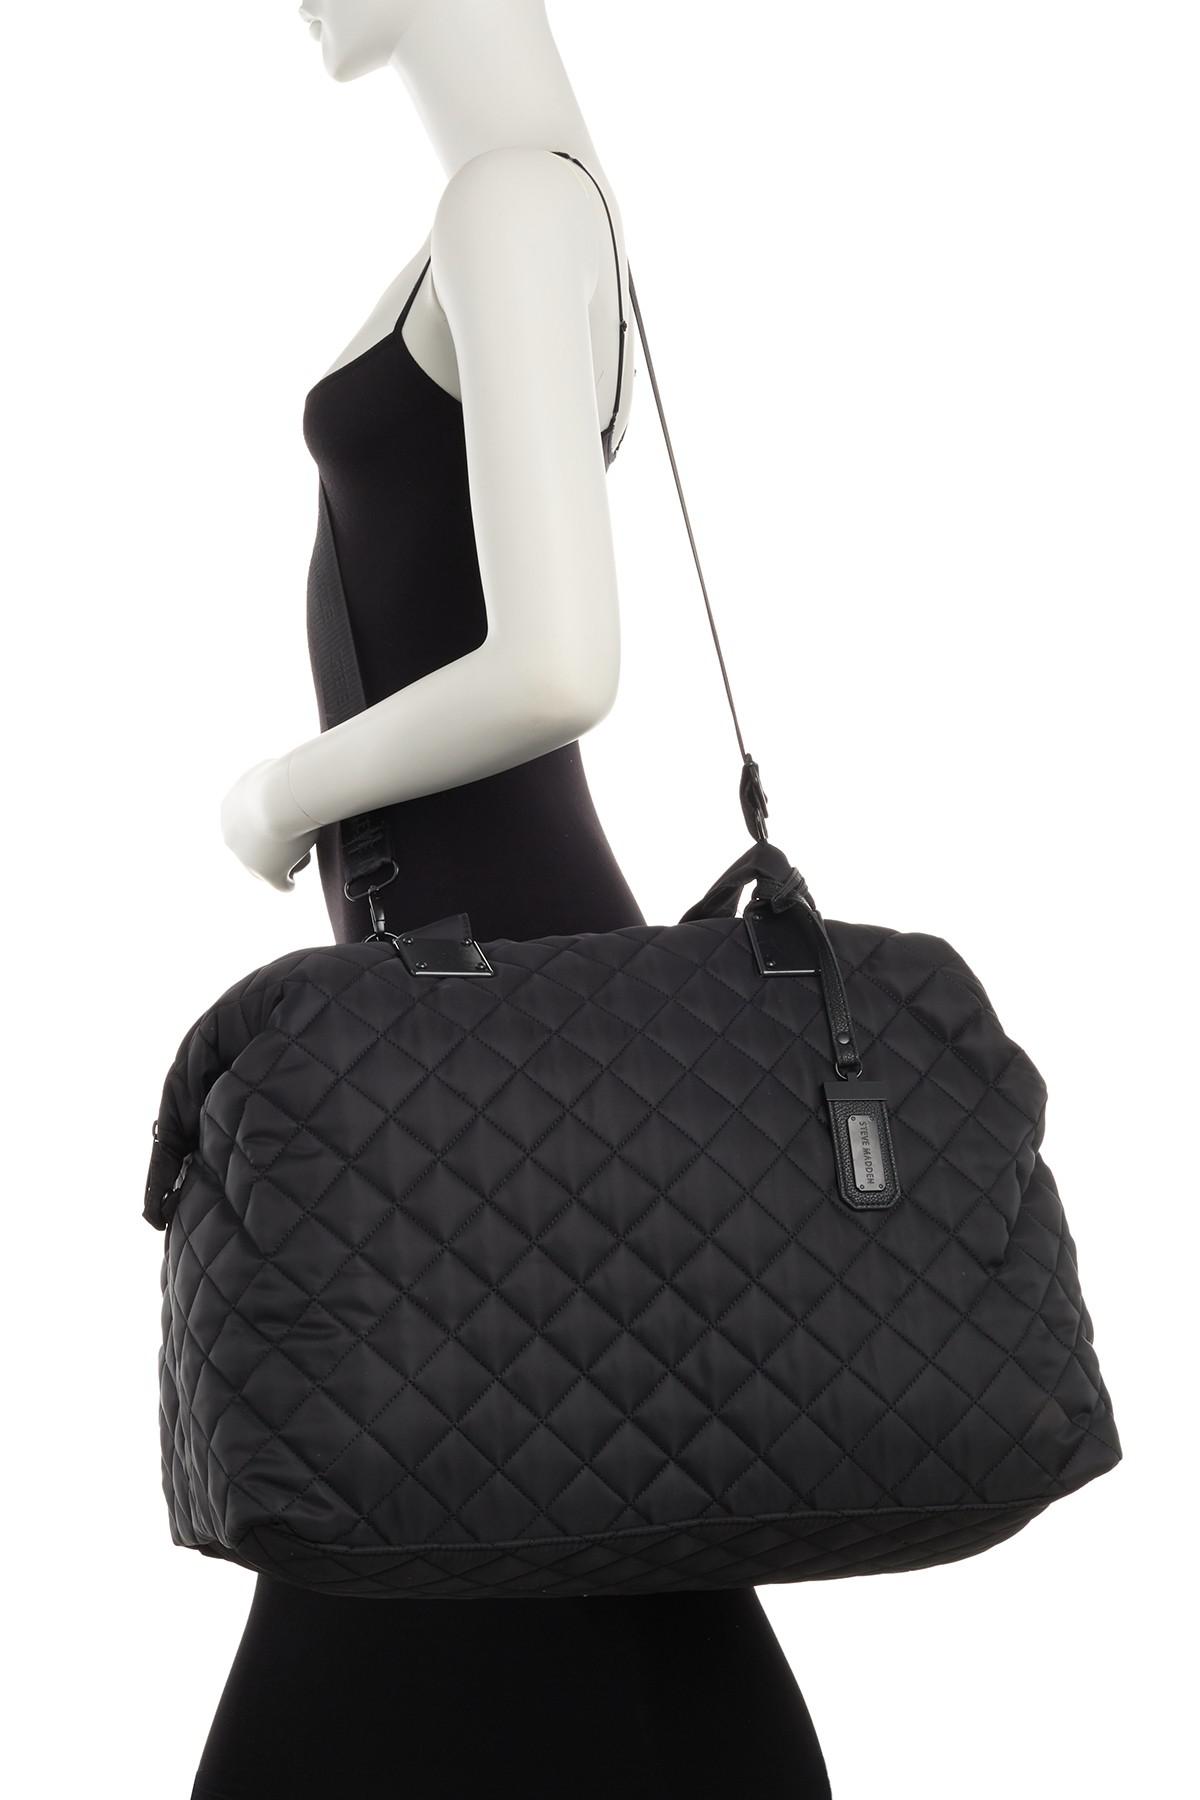 Steve Madden black large weekender quilted travel bag - $48 - From Renata